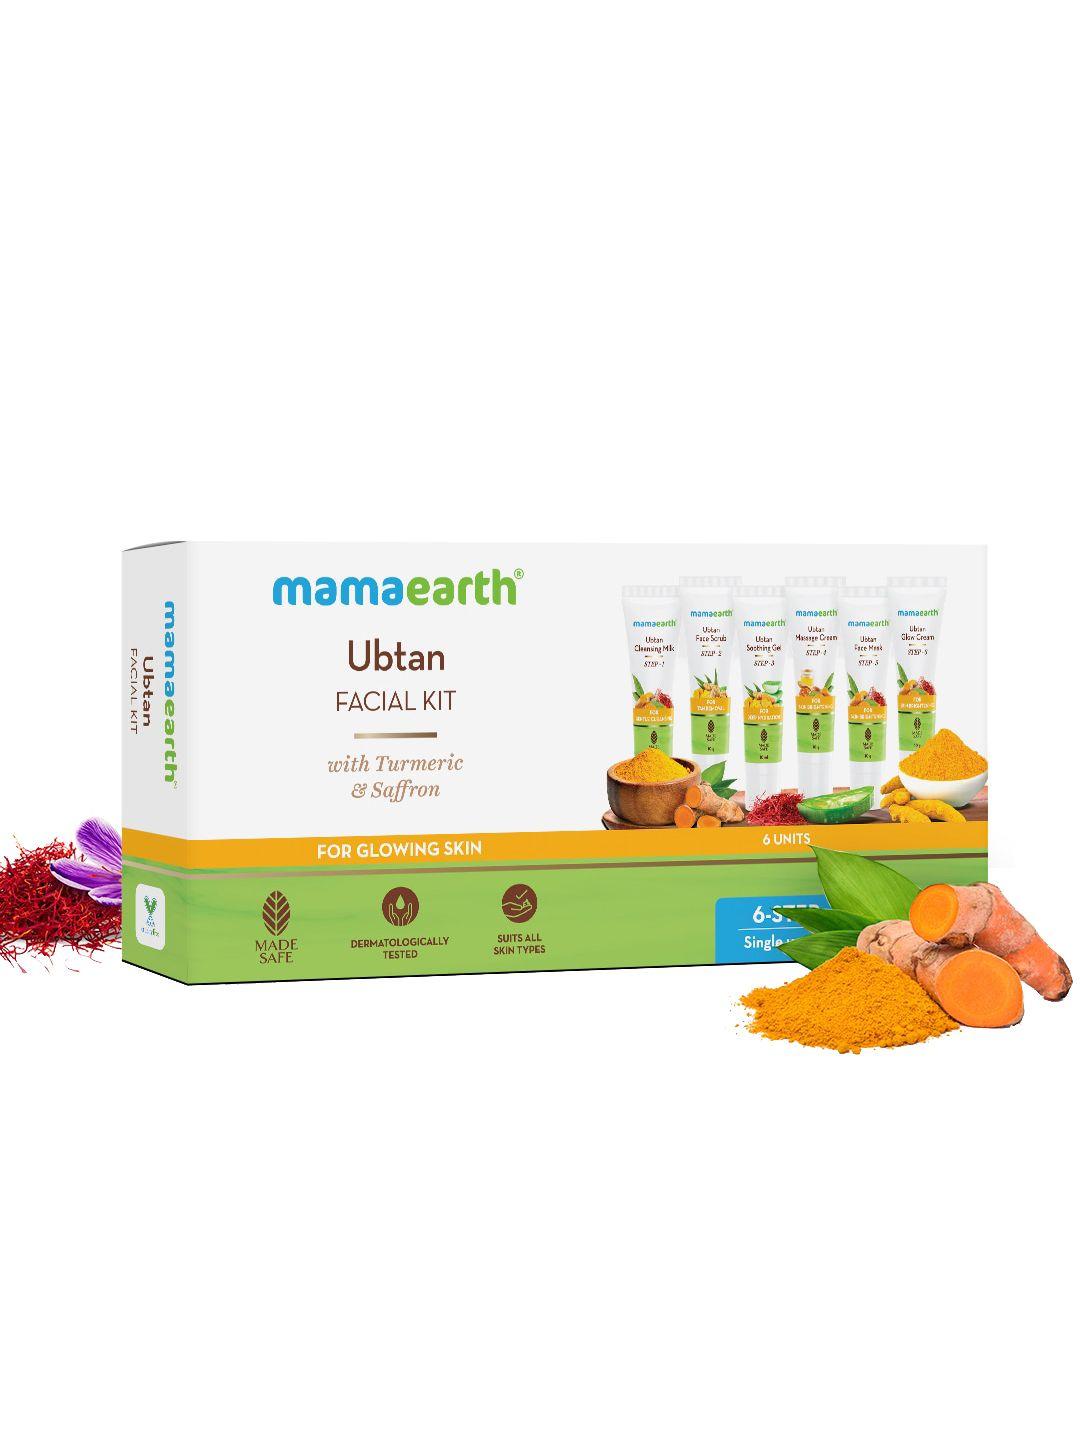 mamaearth ubtan facial kit with turmeric & saffron for glowing skin - 60 g